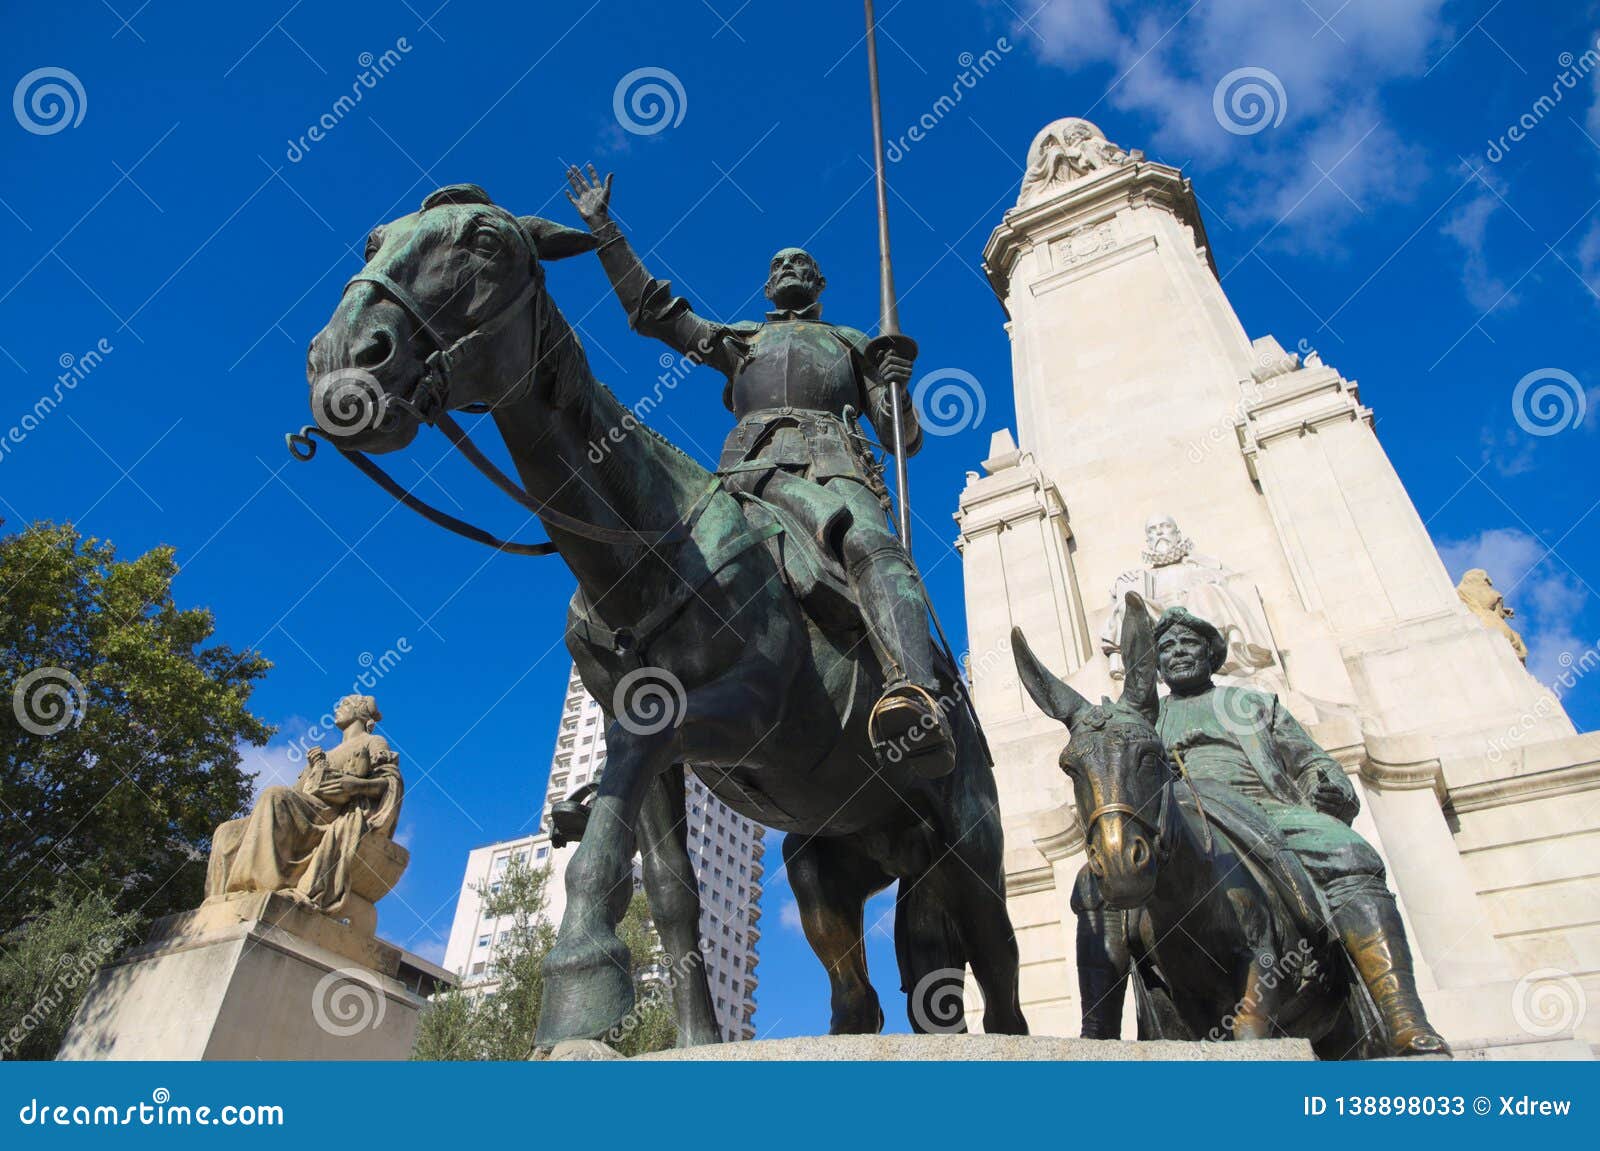 statues of don quixote and sancho panza at the plaza de espana in madrid.